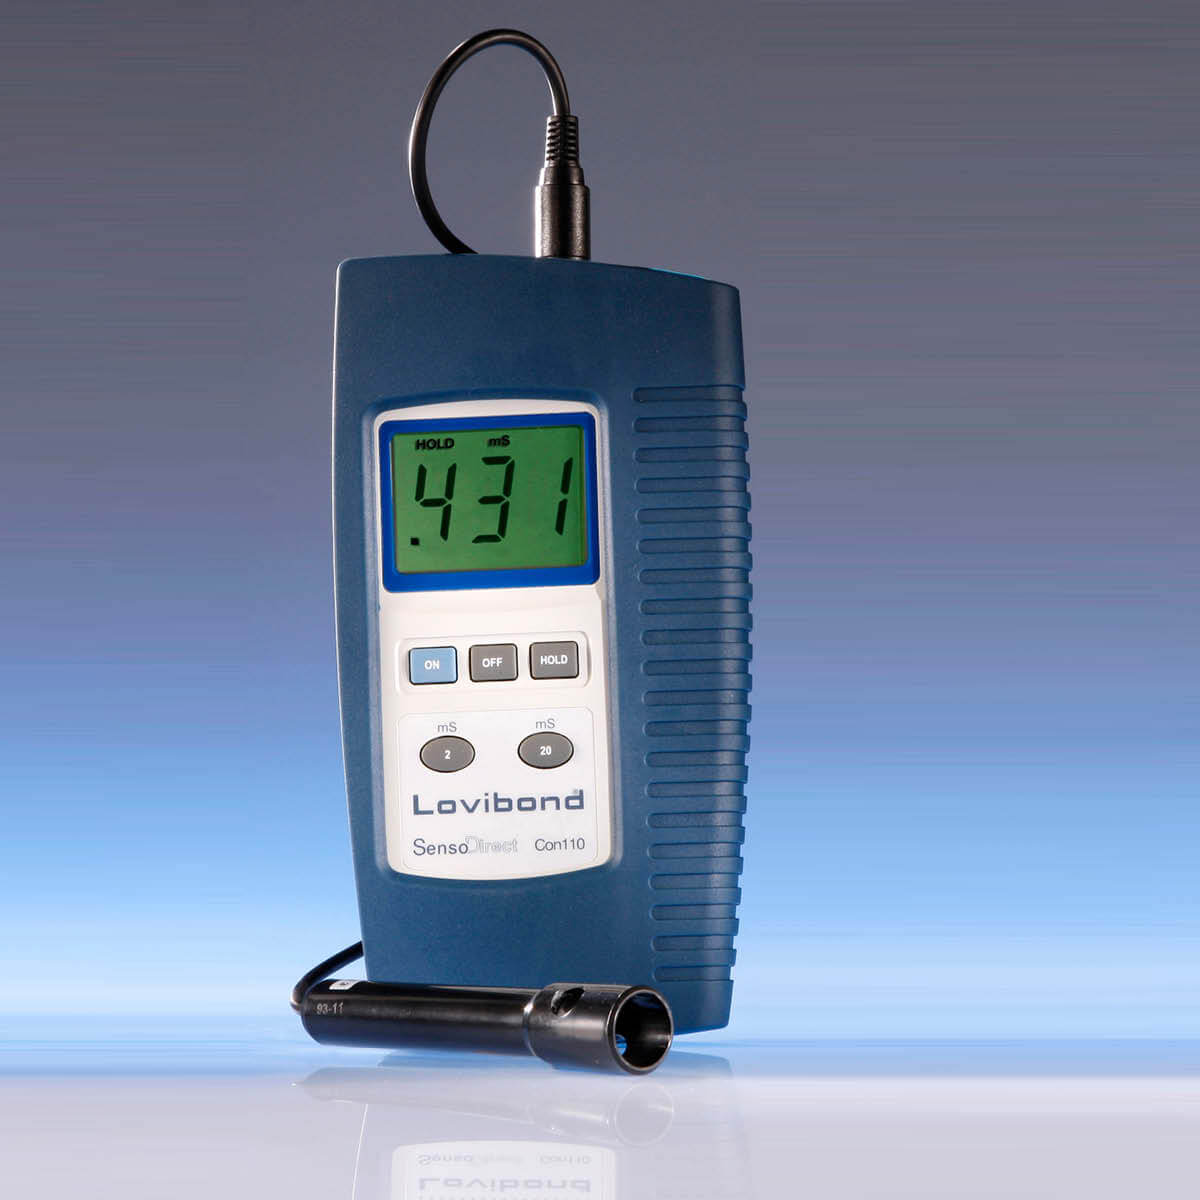 Lovibond SensoDirect 110 Portable Conductivity Kit with Electrode Water Testing Equipment - Cleanflow